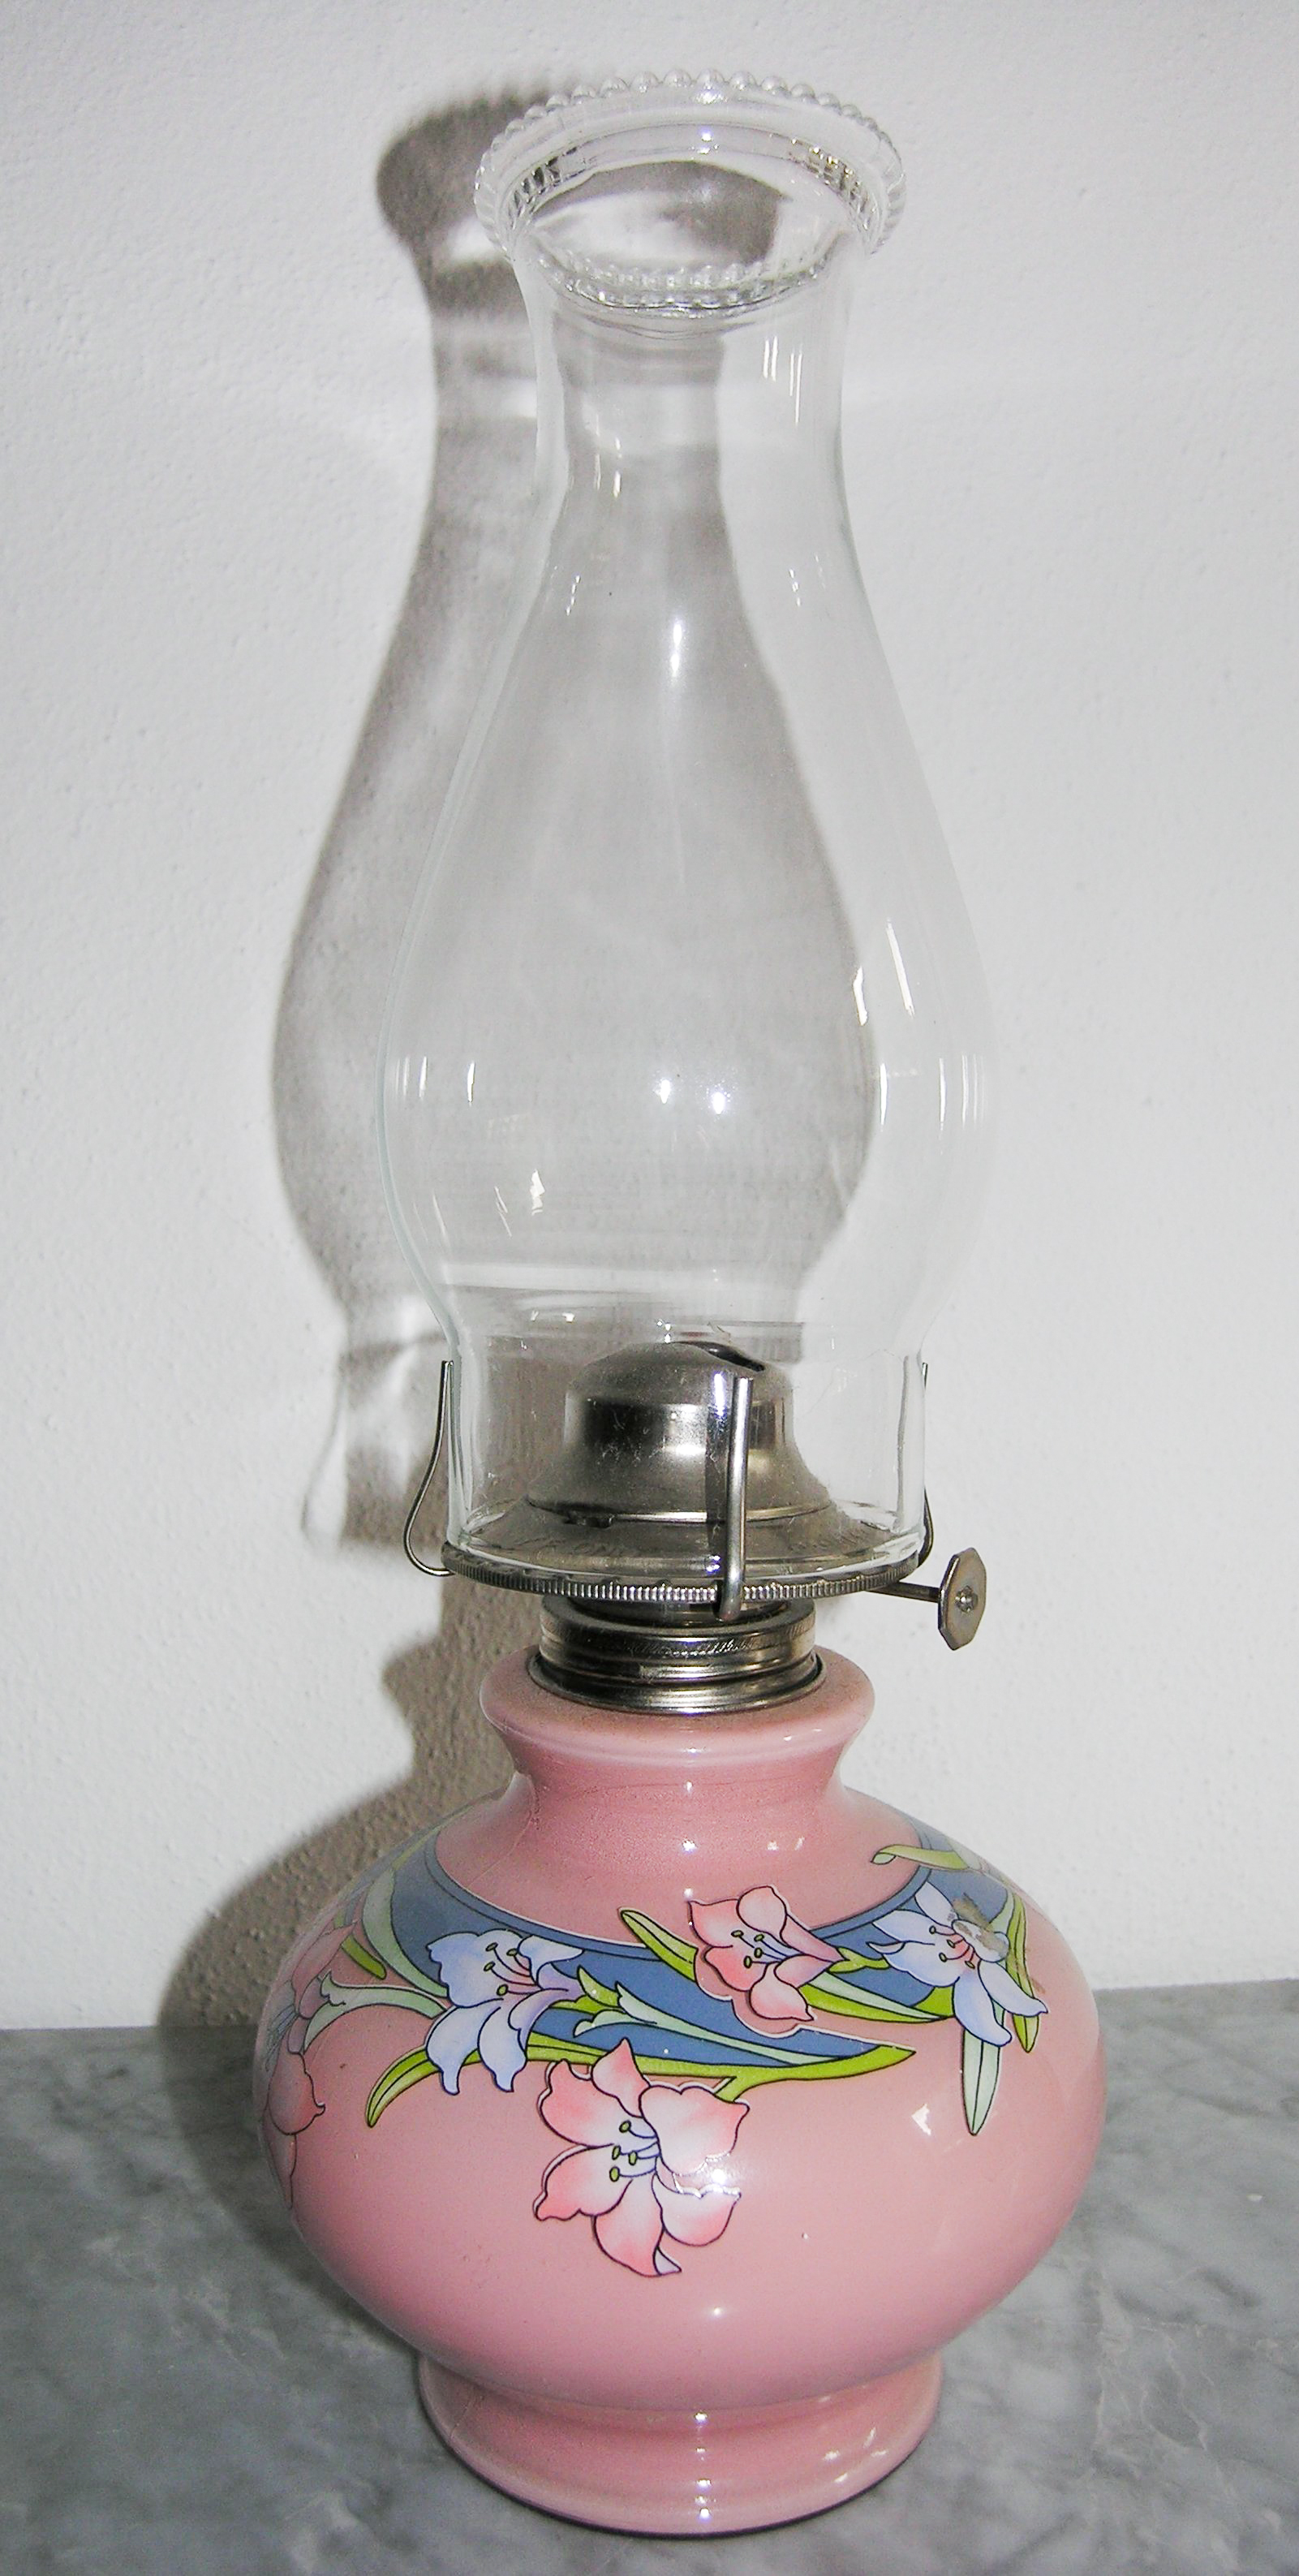 Flat Wick Round/Flat Cotton Oil Lamp Lantern Wick Replacement Parts for Kerosene Burner Lighting Accessories